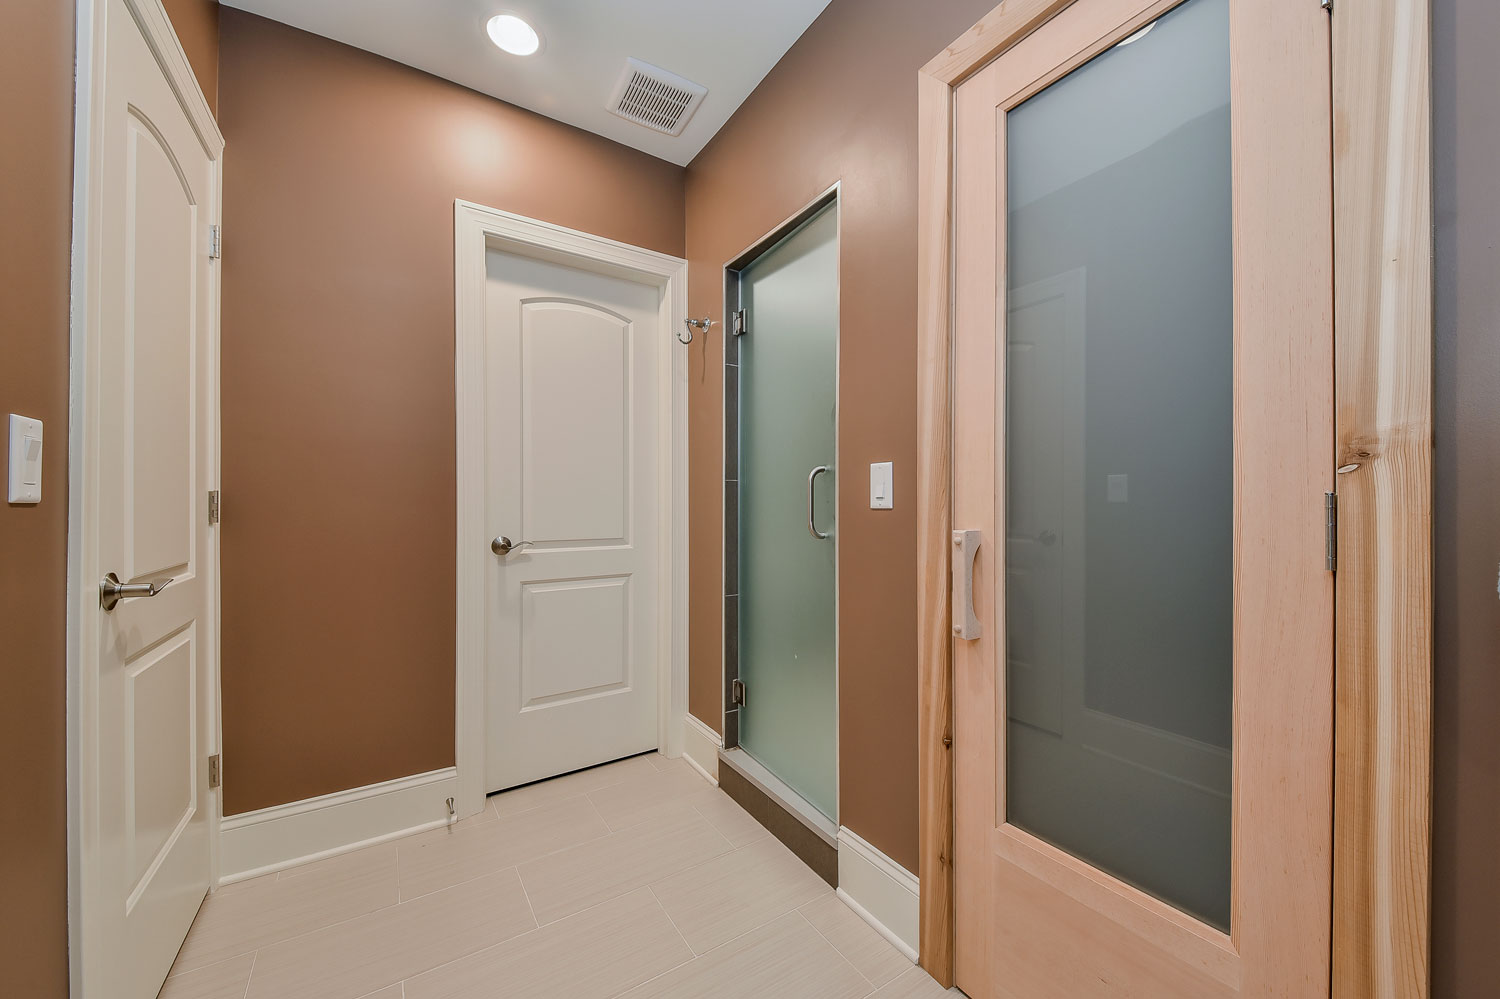 Downers Grove Basement Bathroom Remodel with Sauna, Steam Shower - Sebring Design Build